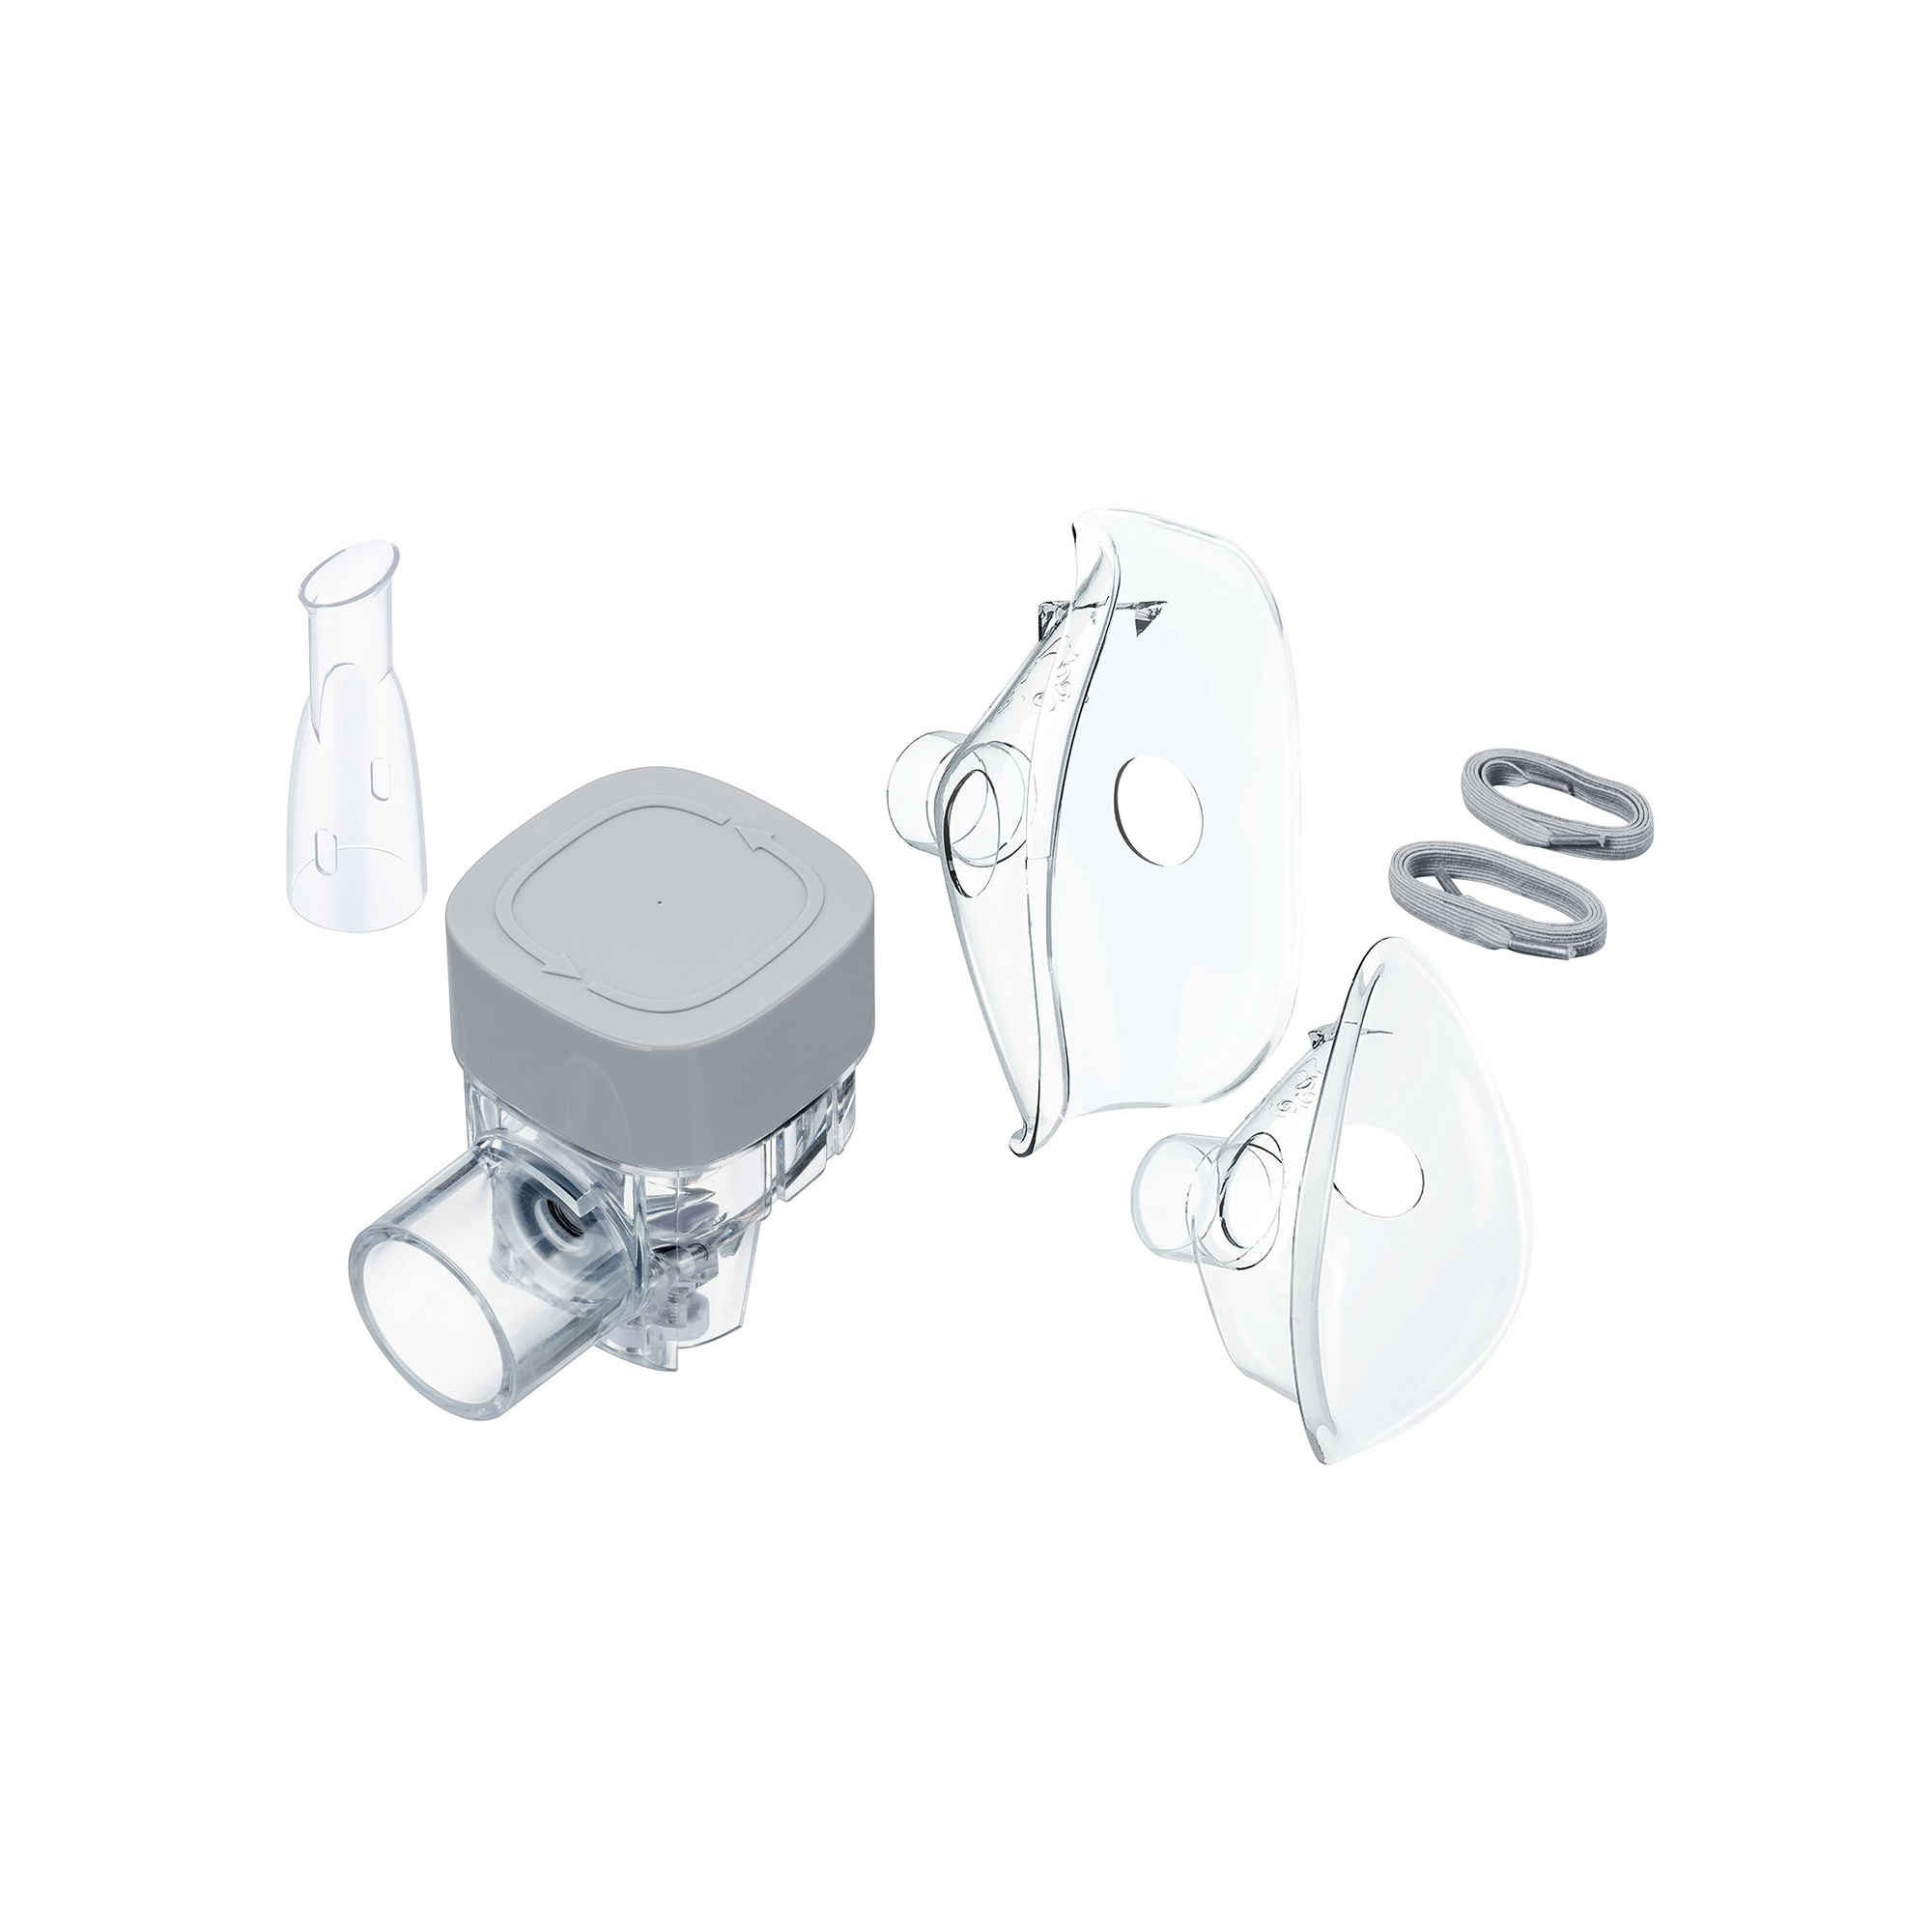 Inhalator AIR COMPACT, Yearpack Kit, von Medel